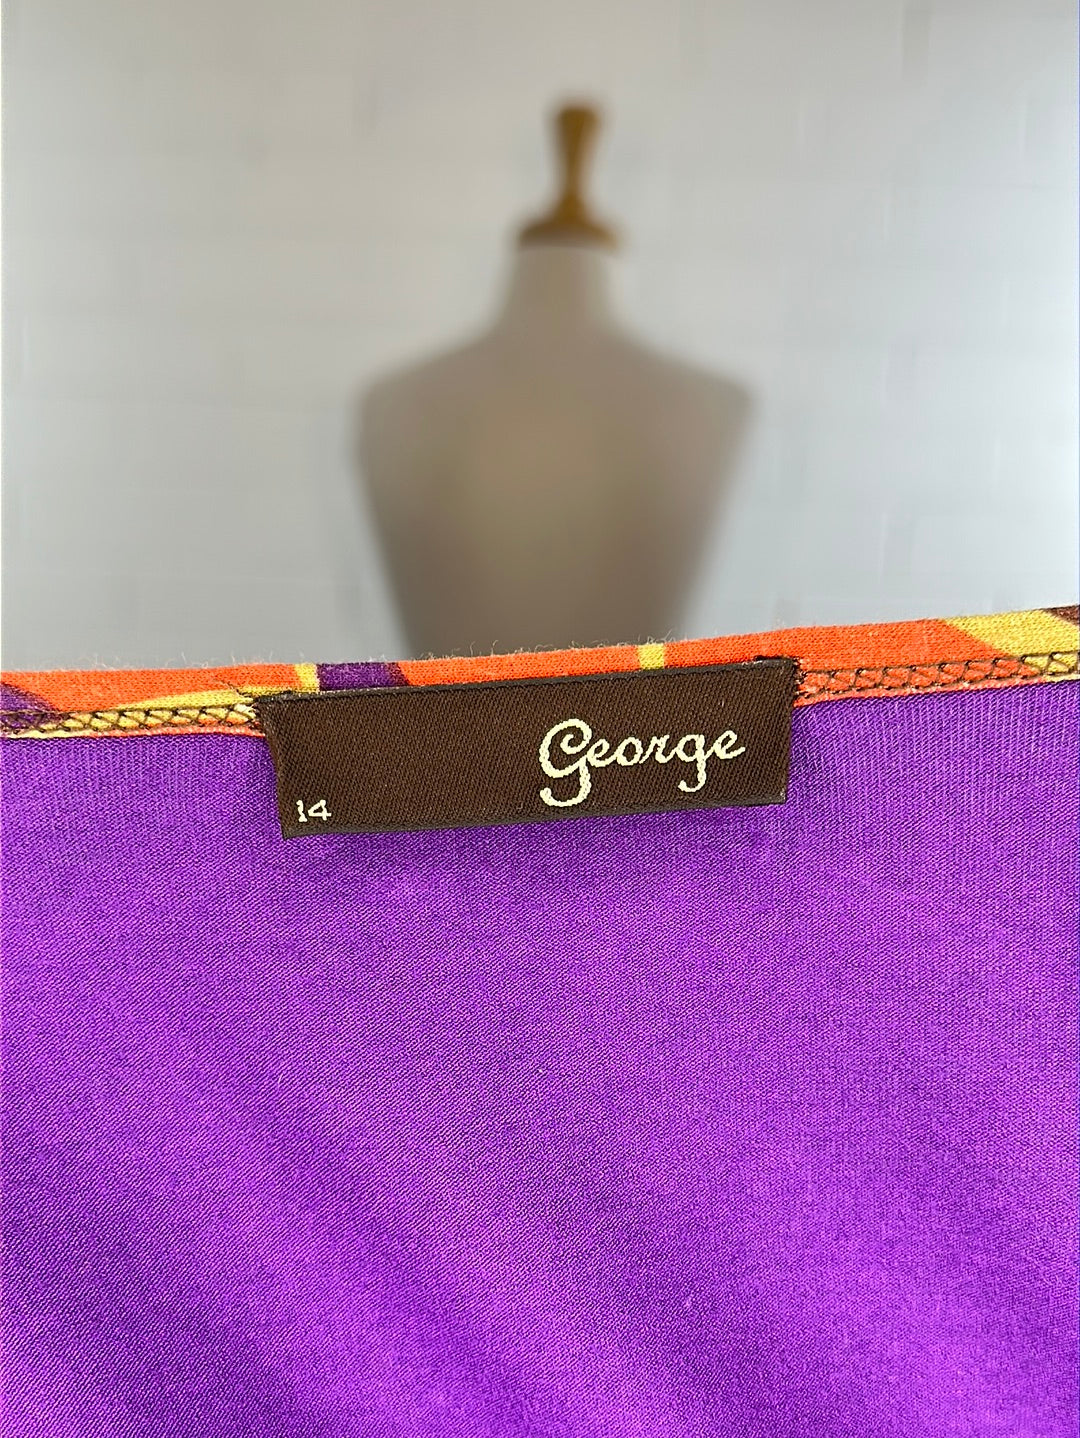 George | dress | size 14 | midi length